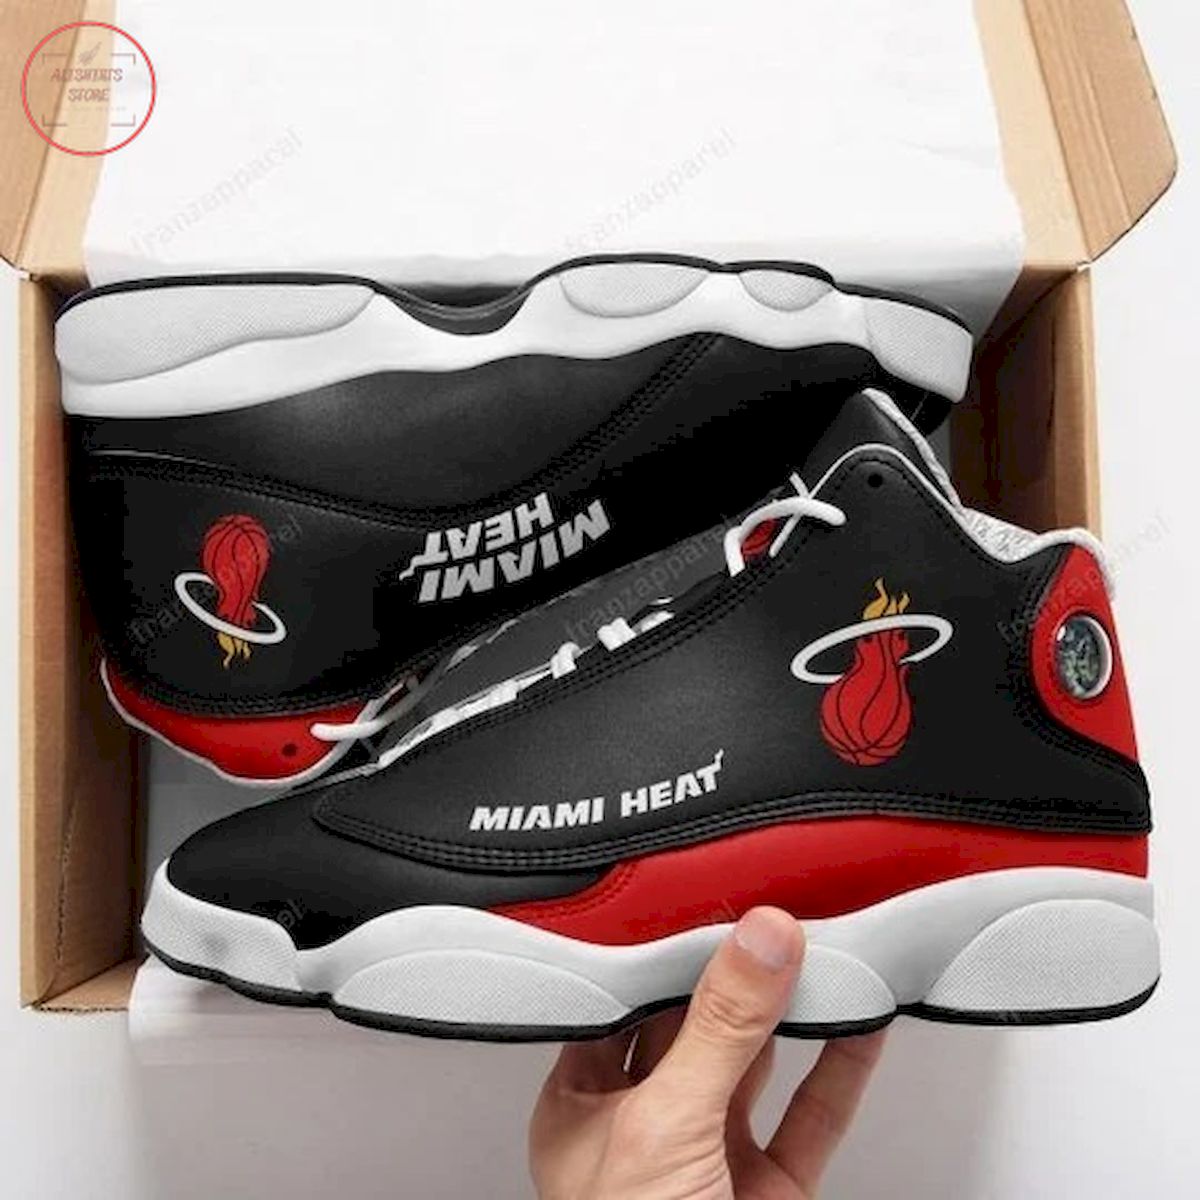 NBA Miami Heat Air Jordan 13 Sneakers Shoes